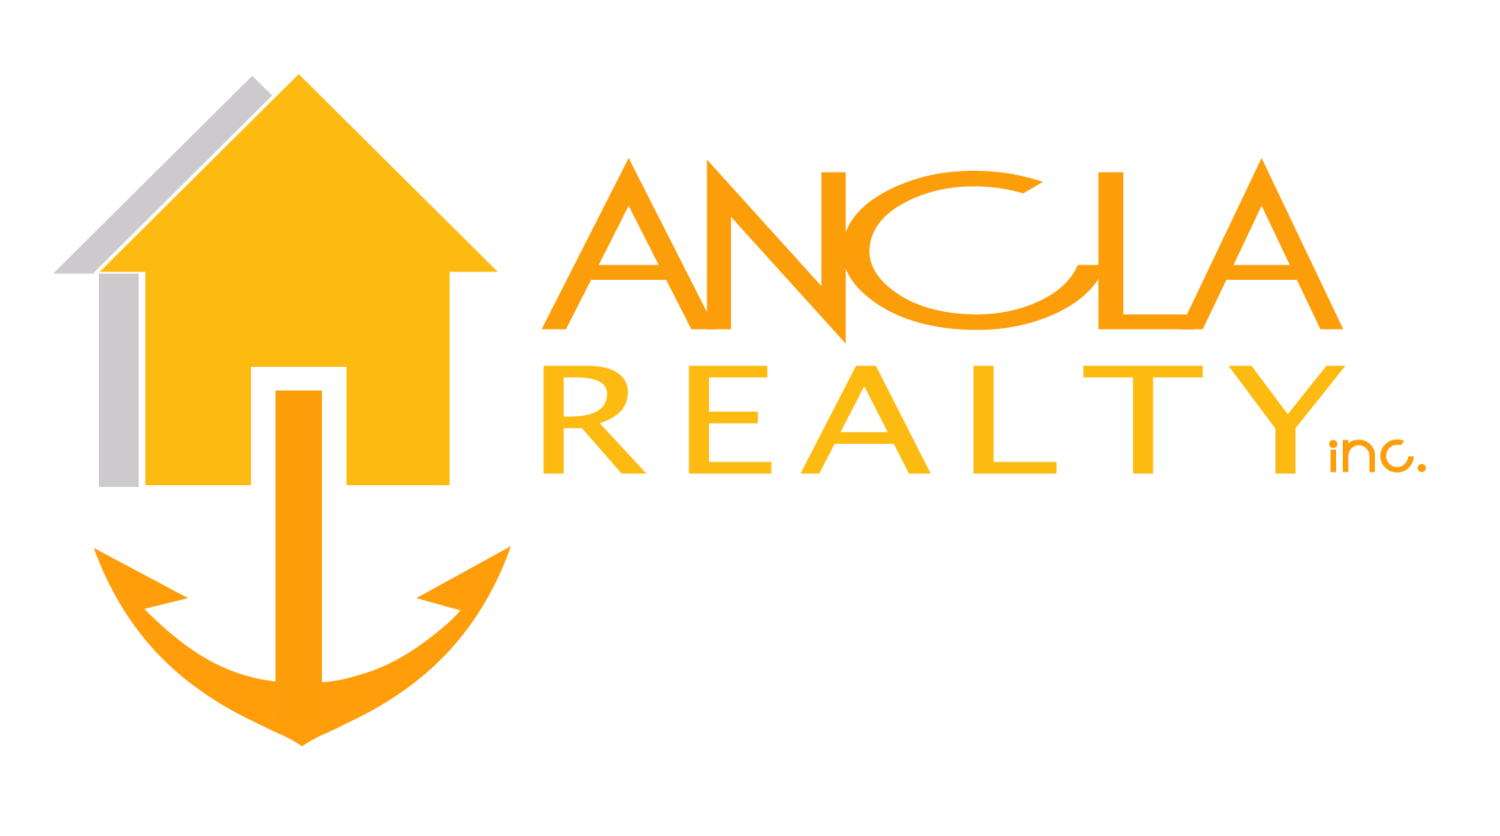 Ancla Realty, Inc. by Carolina Hernandez